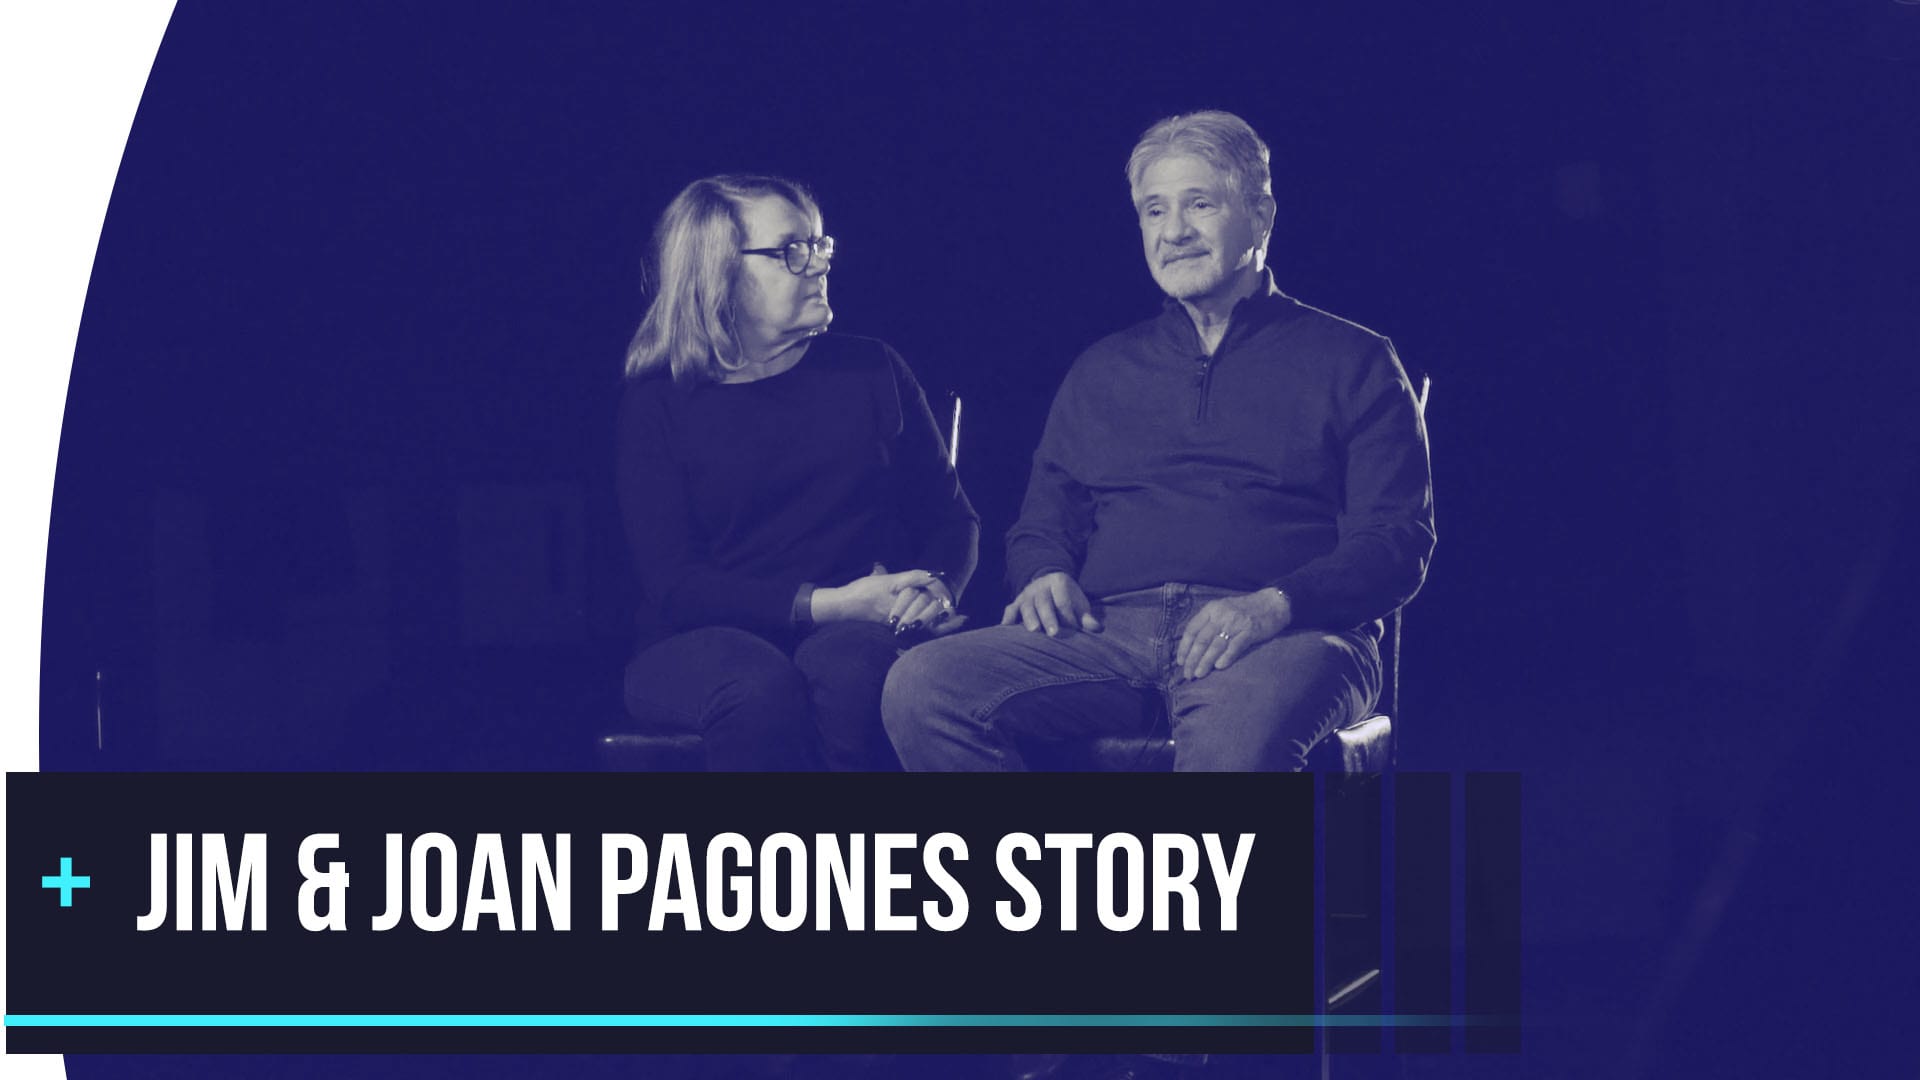 Jim and Joan Pagones story